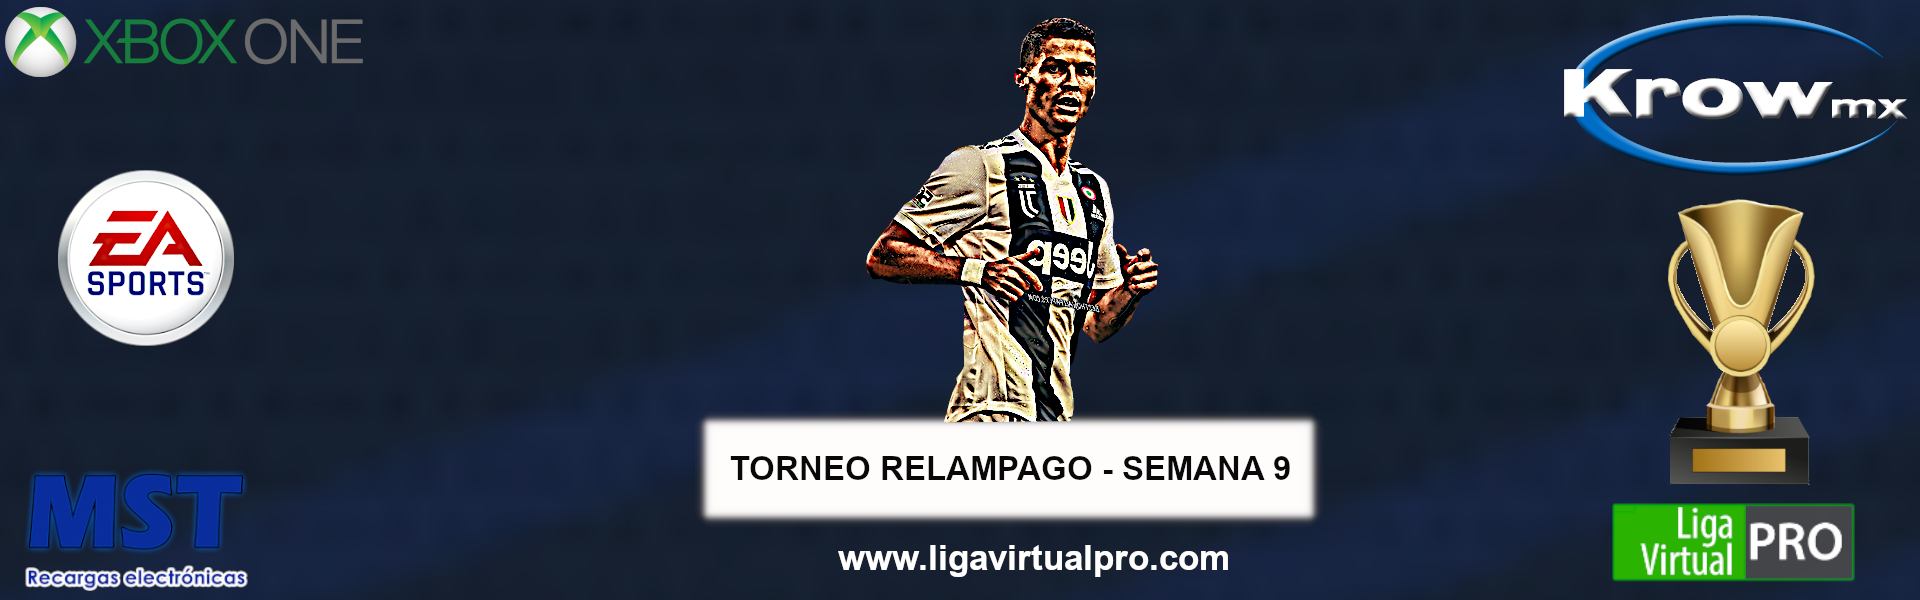 Logo-TORNEO RELAMPAGO - SEMANA 9